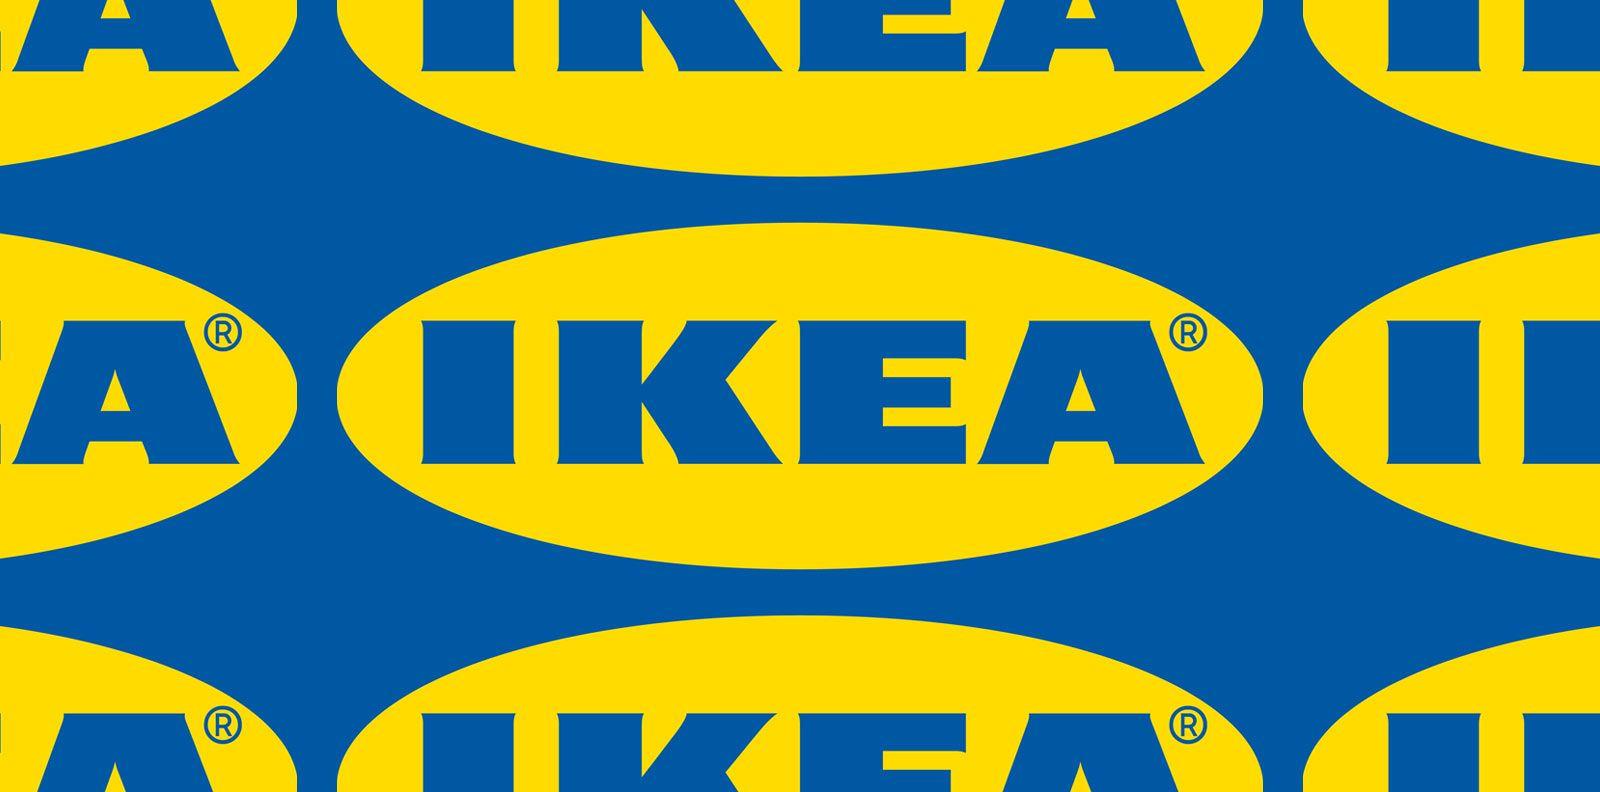 Ikea.com Logo - IKEA Logo Renovation: Can You Spot The Changes? on The Designest